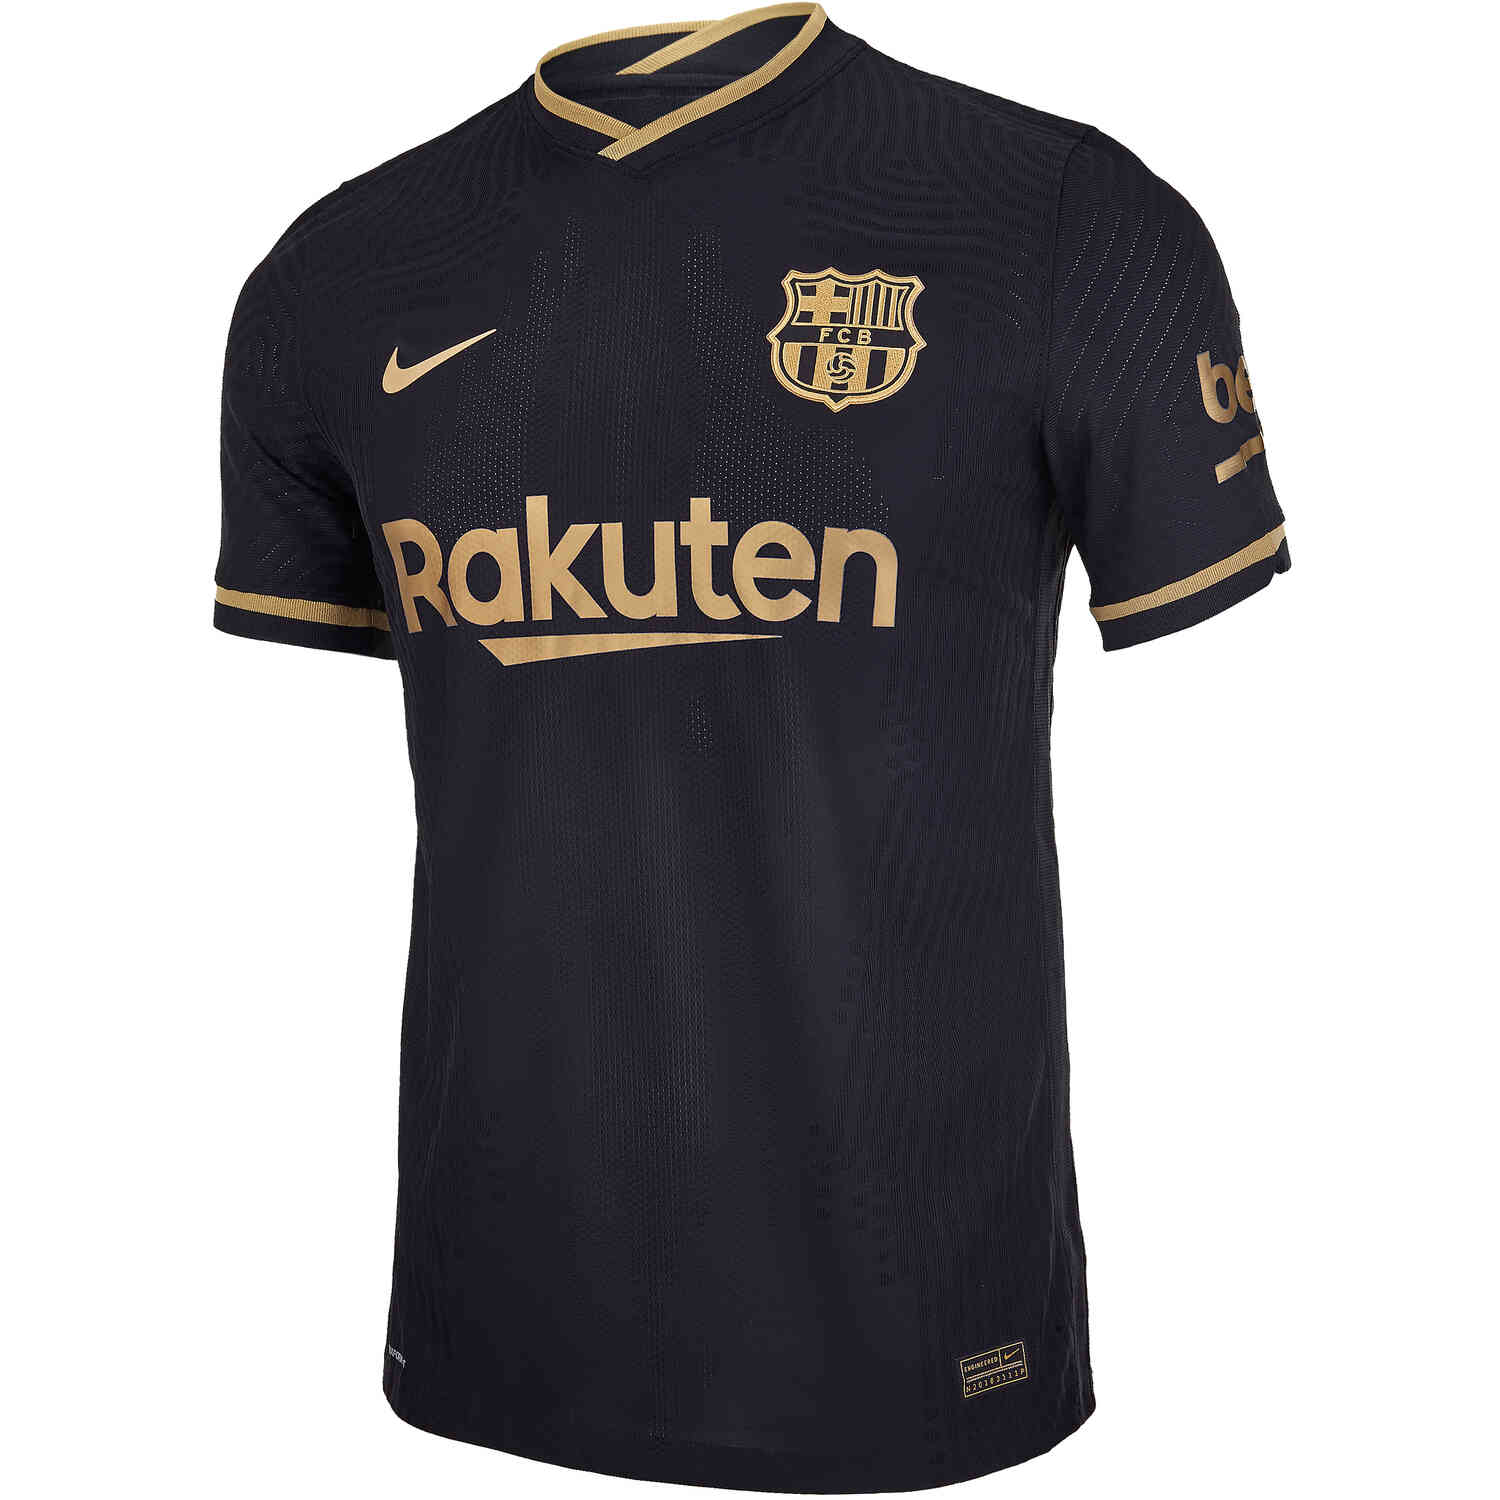 2020/21 Nike Barcelona Away Match Jersey SoccerPro